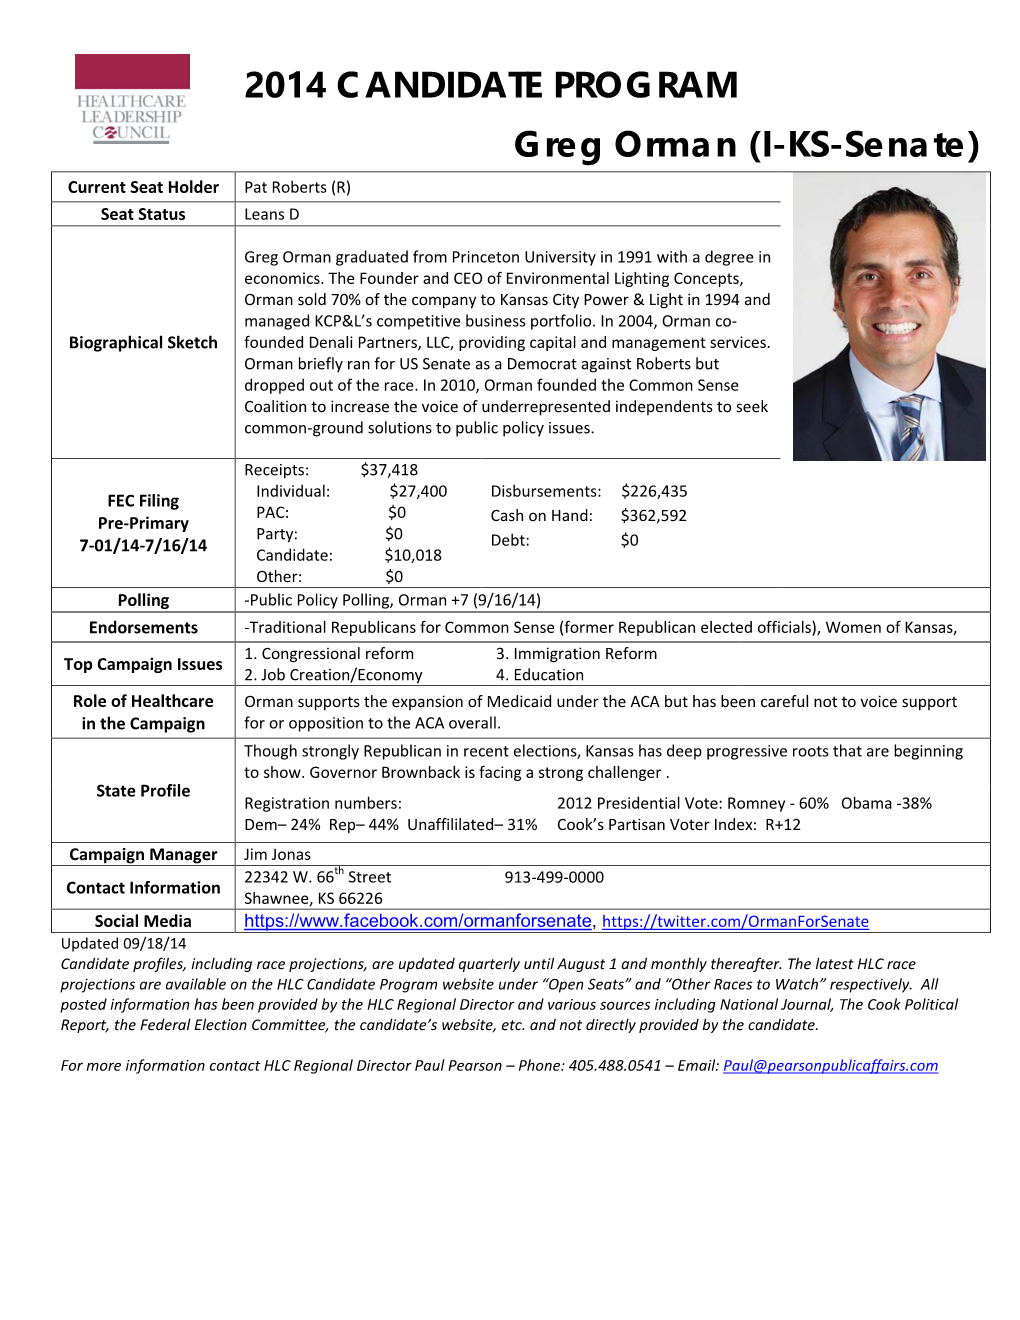 2014 CANDIDATE PROGRAM Greg Orman (I-KS-Senate)